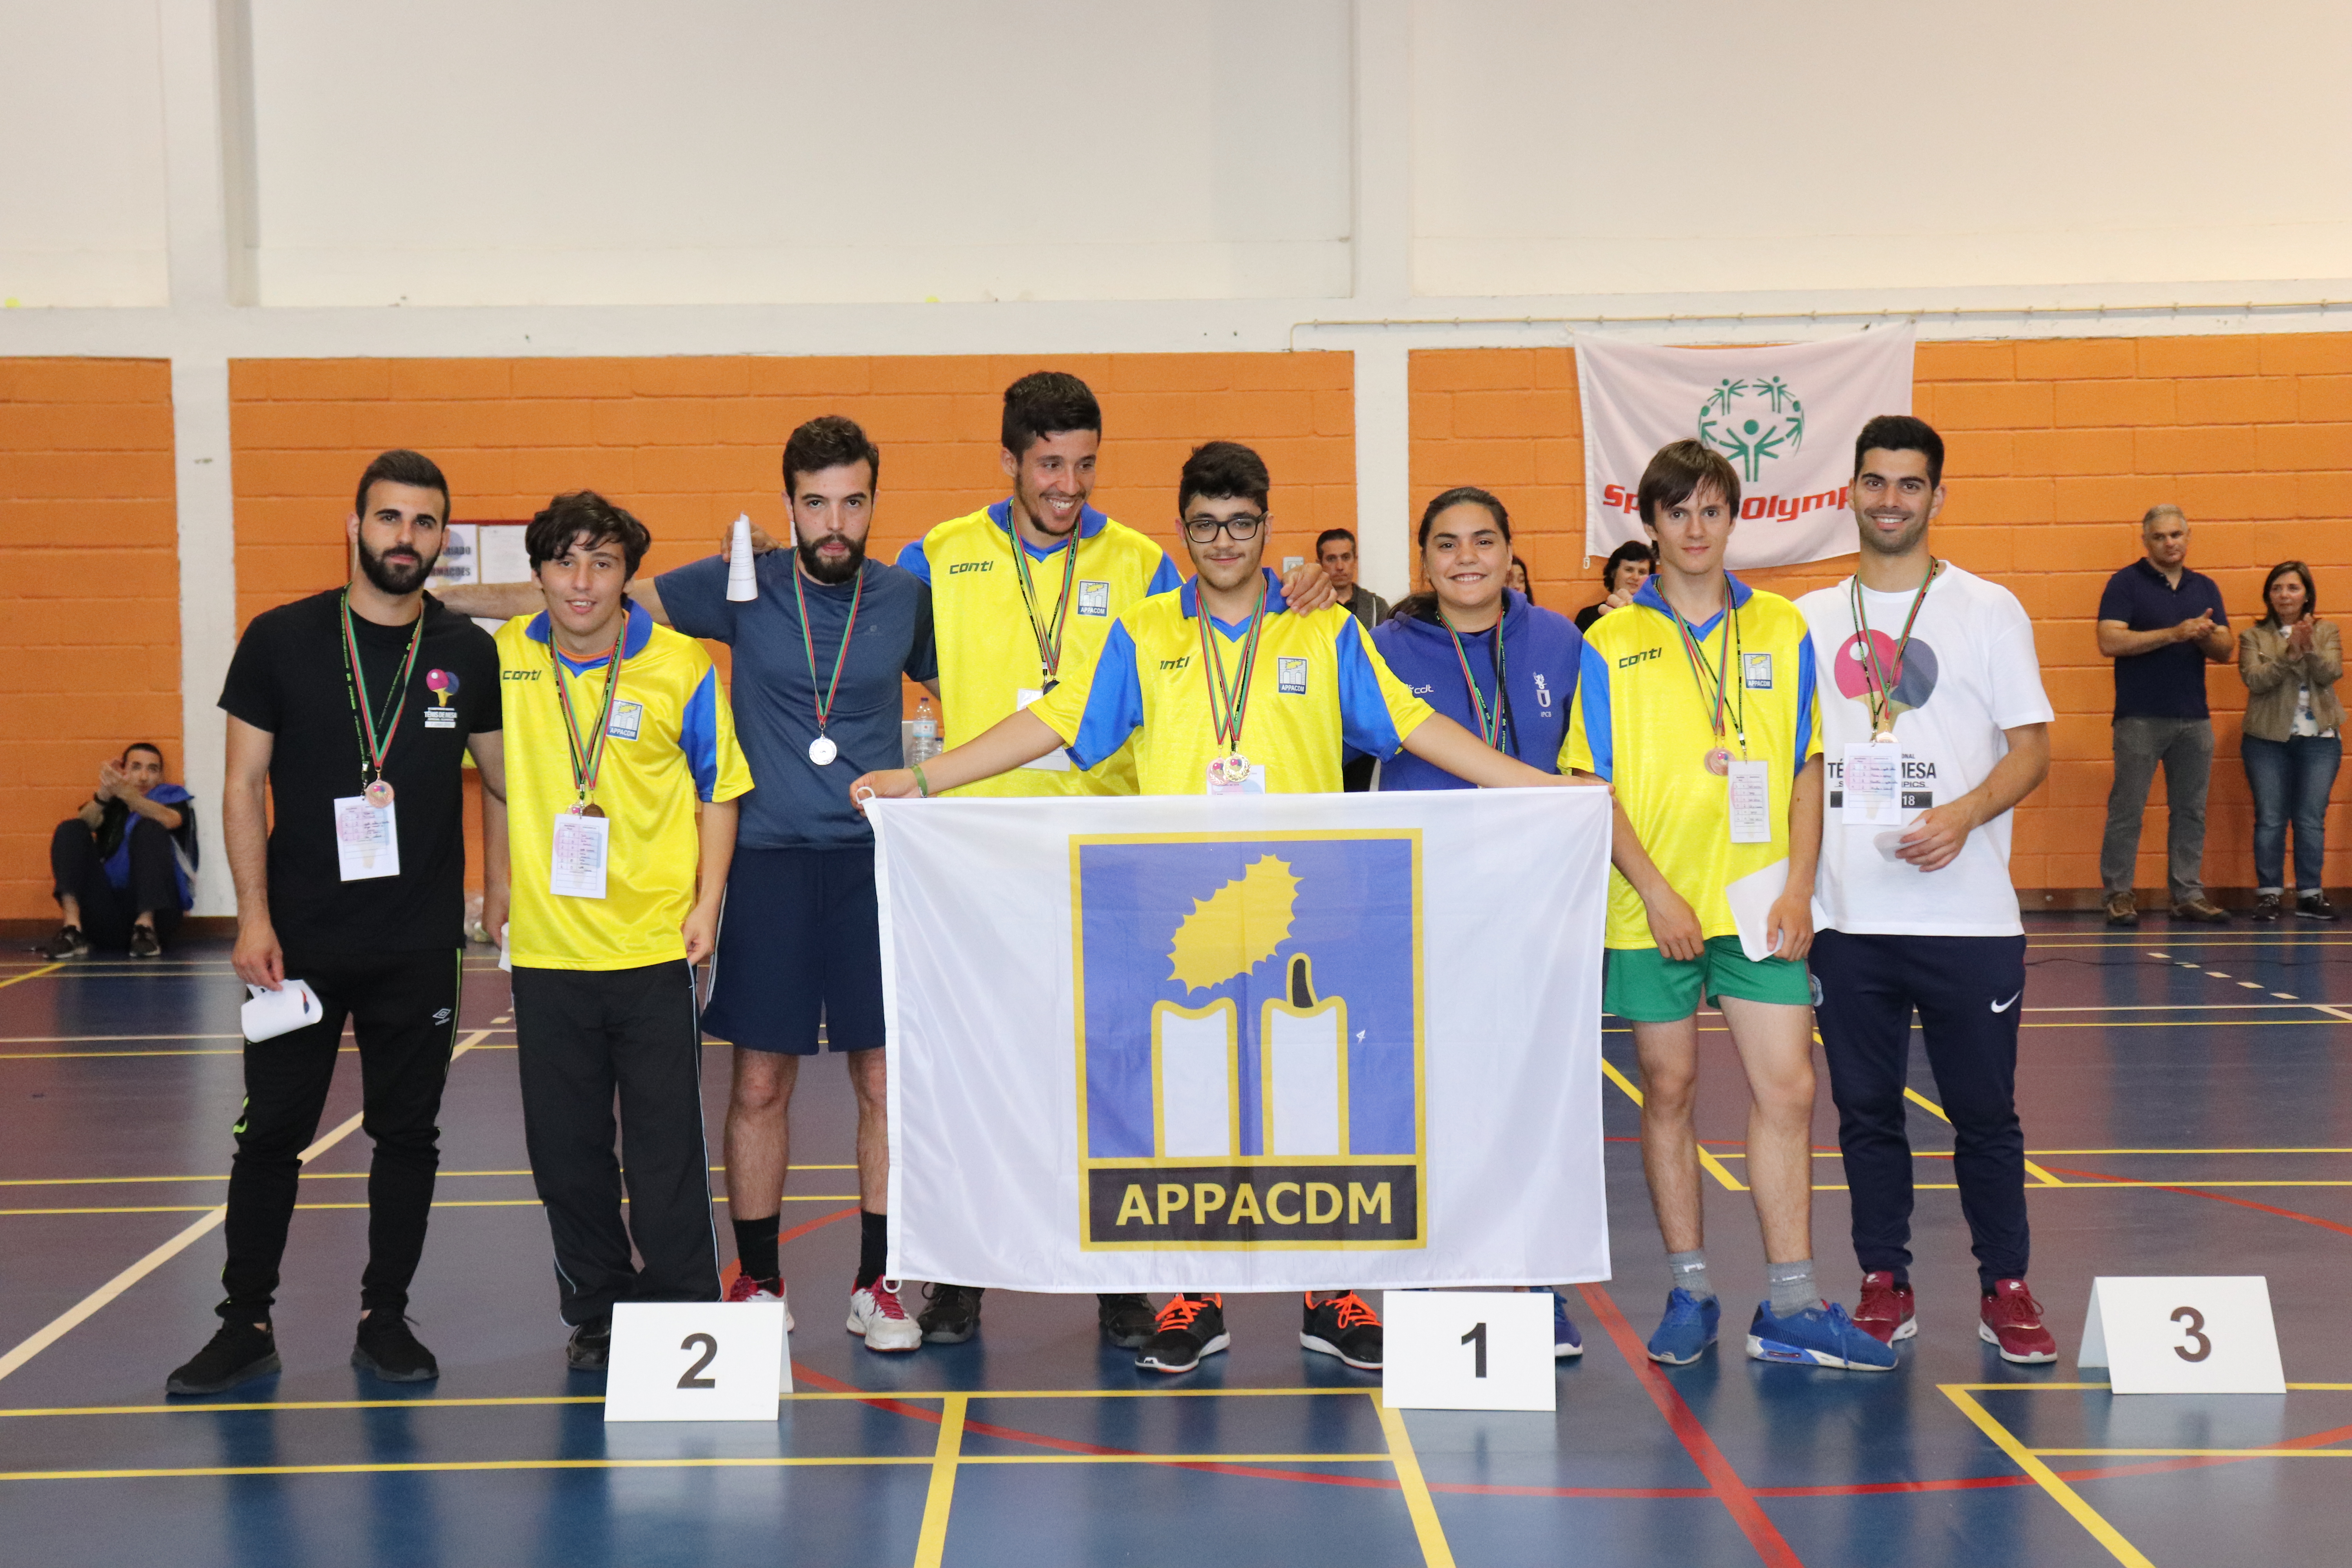 Castelo Branco: Desporto Adaptado da APPACDM obteve vários títulos